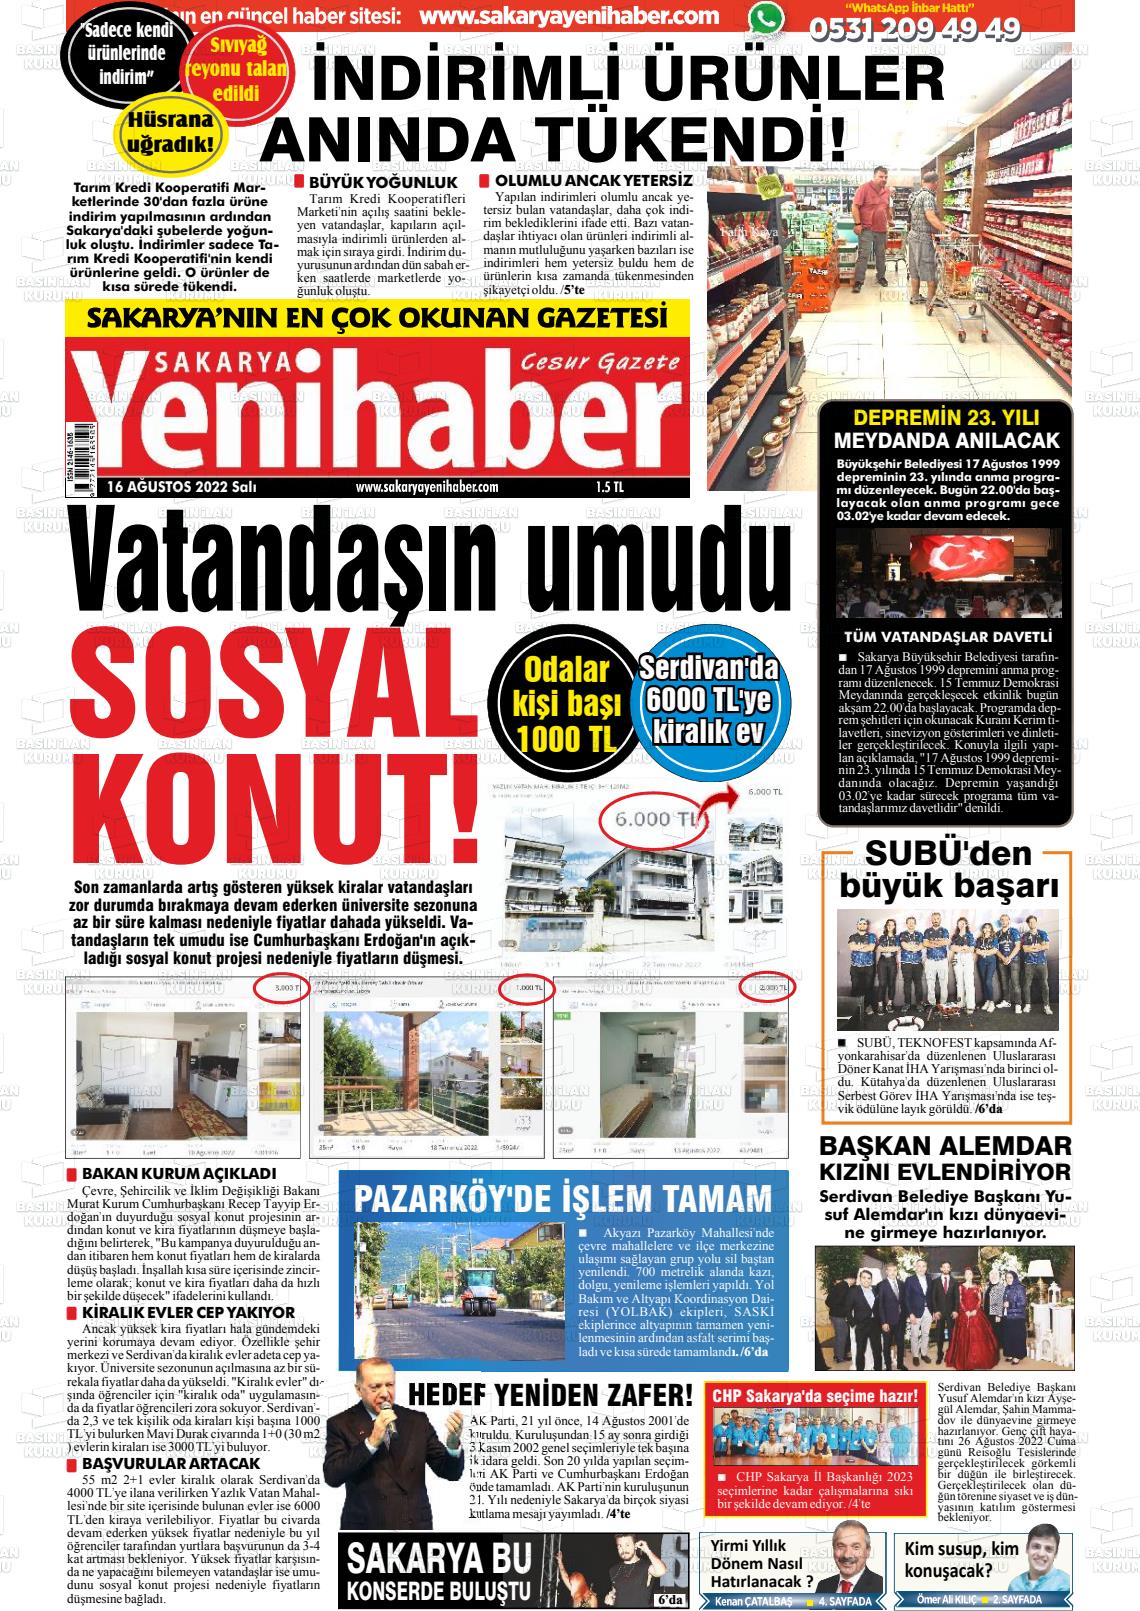 16 Ağustos 2022 Sakarya Yeni Haber Gazete Manşeti